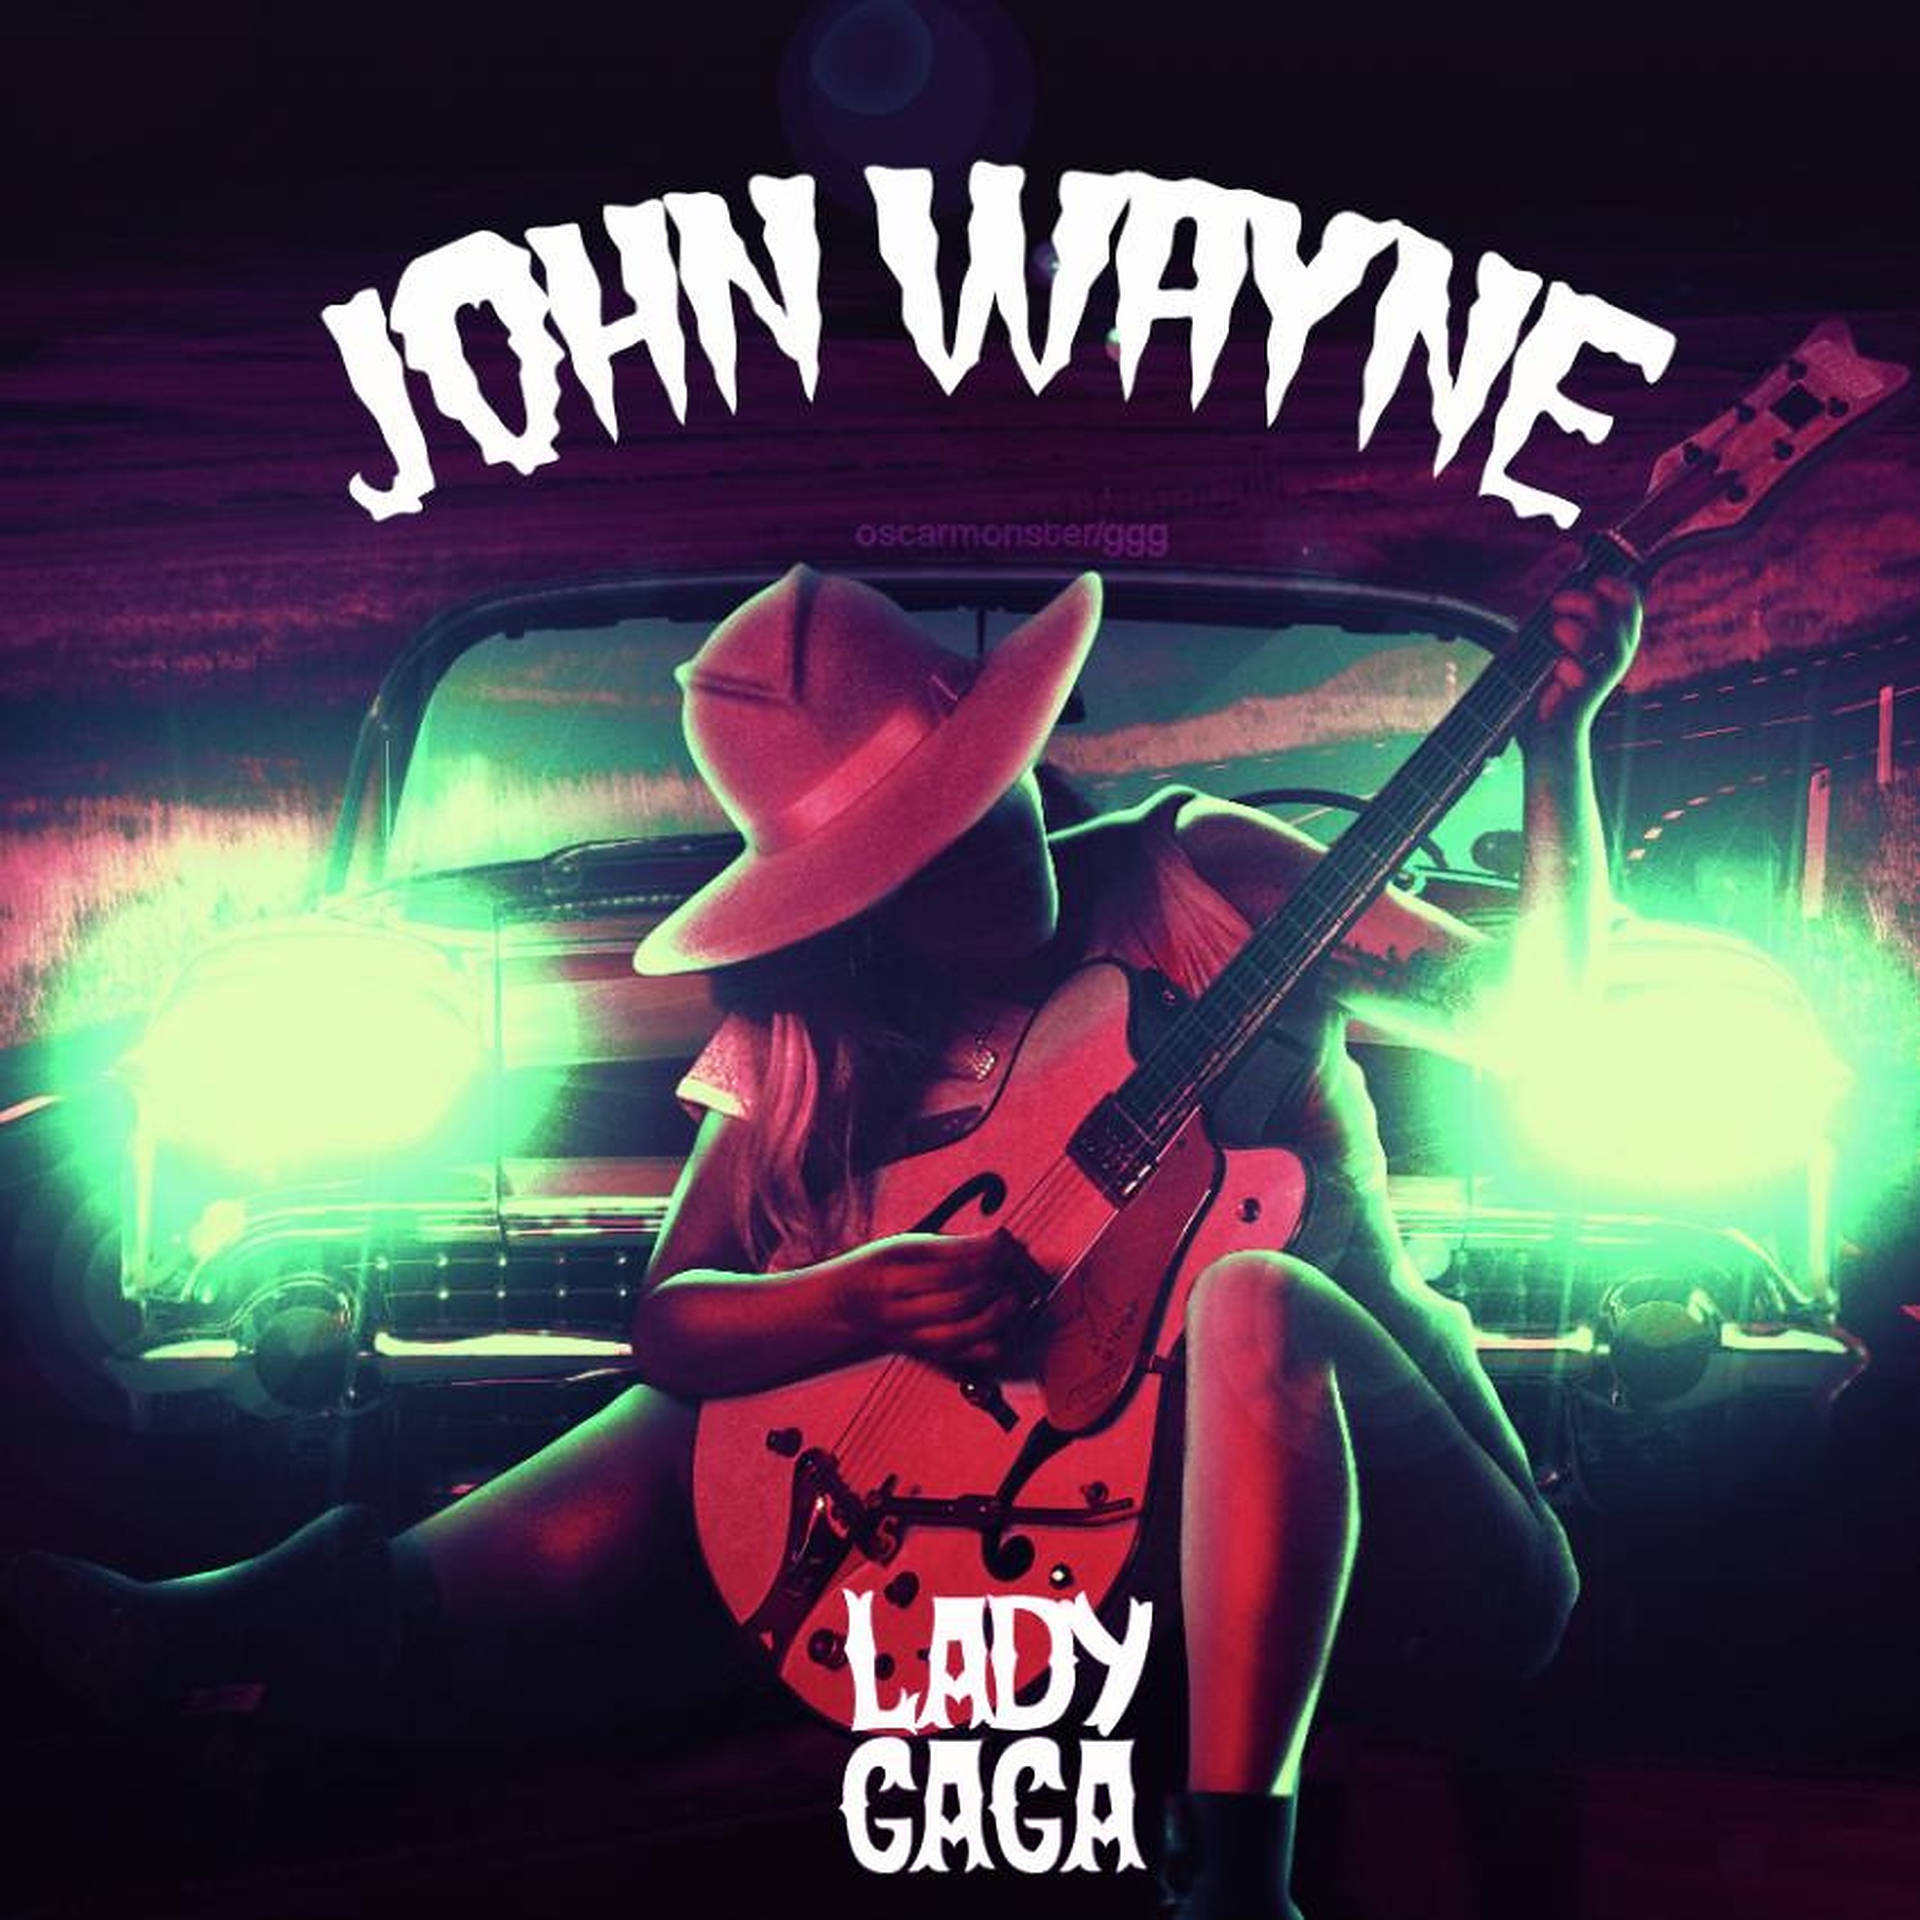 John Wayne And Lady Gaga Poster Wallpaper